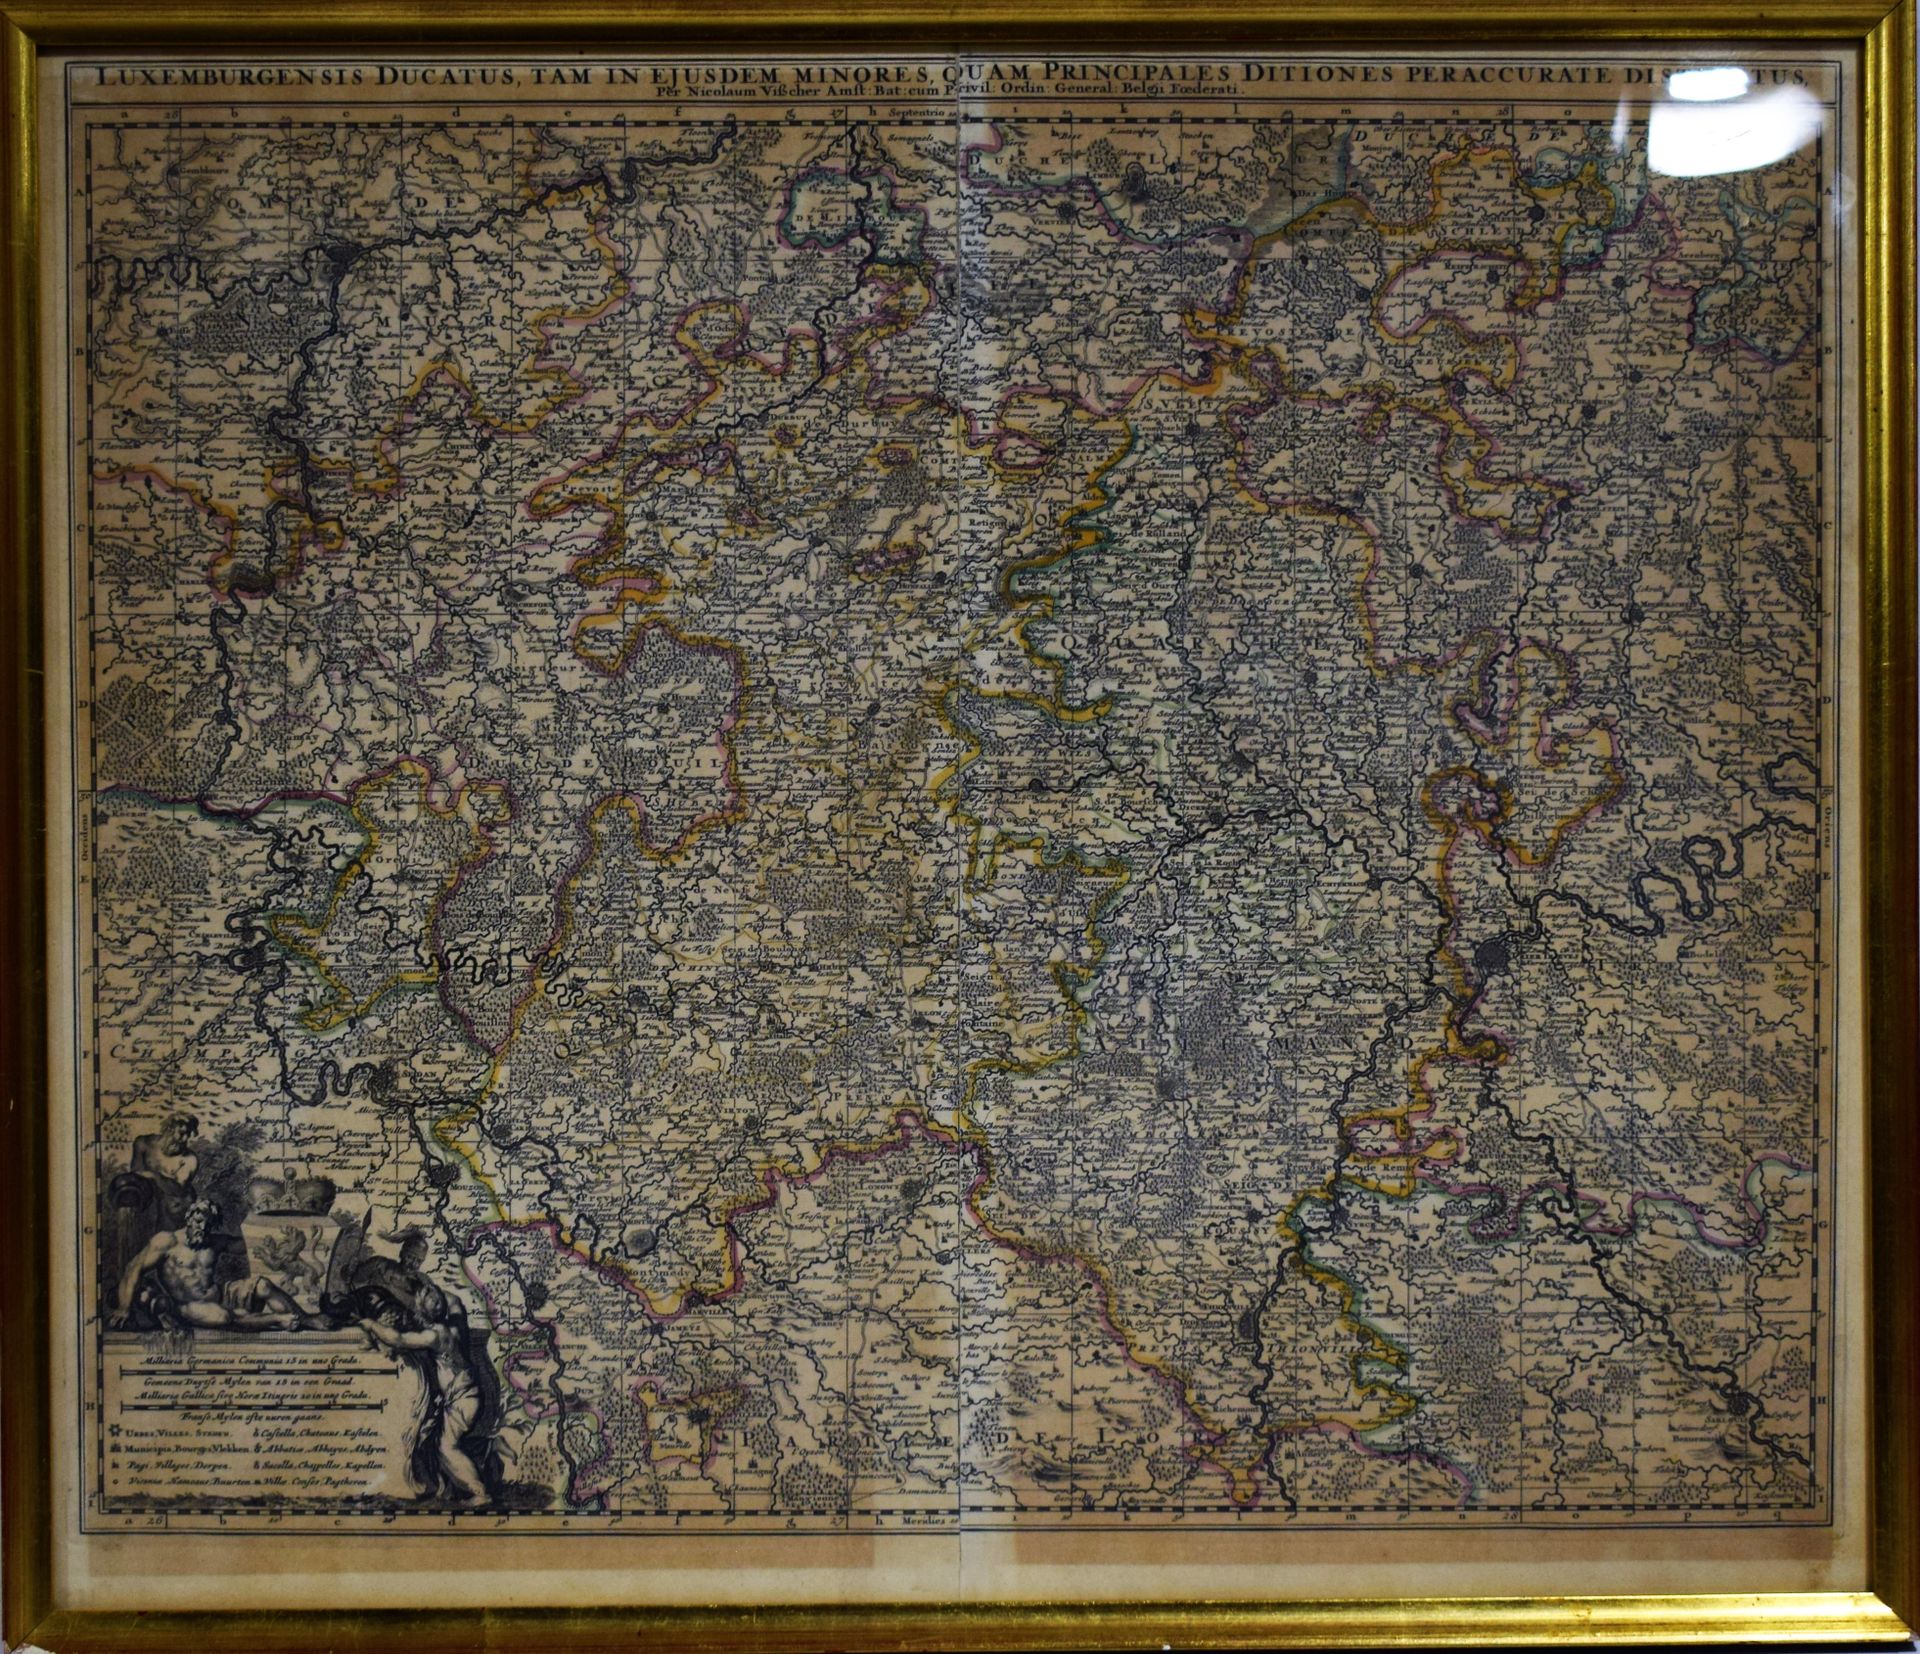 Null (MAP) 卢森堡地图 "Luxemburgensis ducatus, tam in ejusdem minores (...)"，由Johann &hellip;